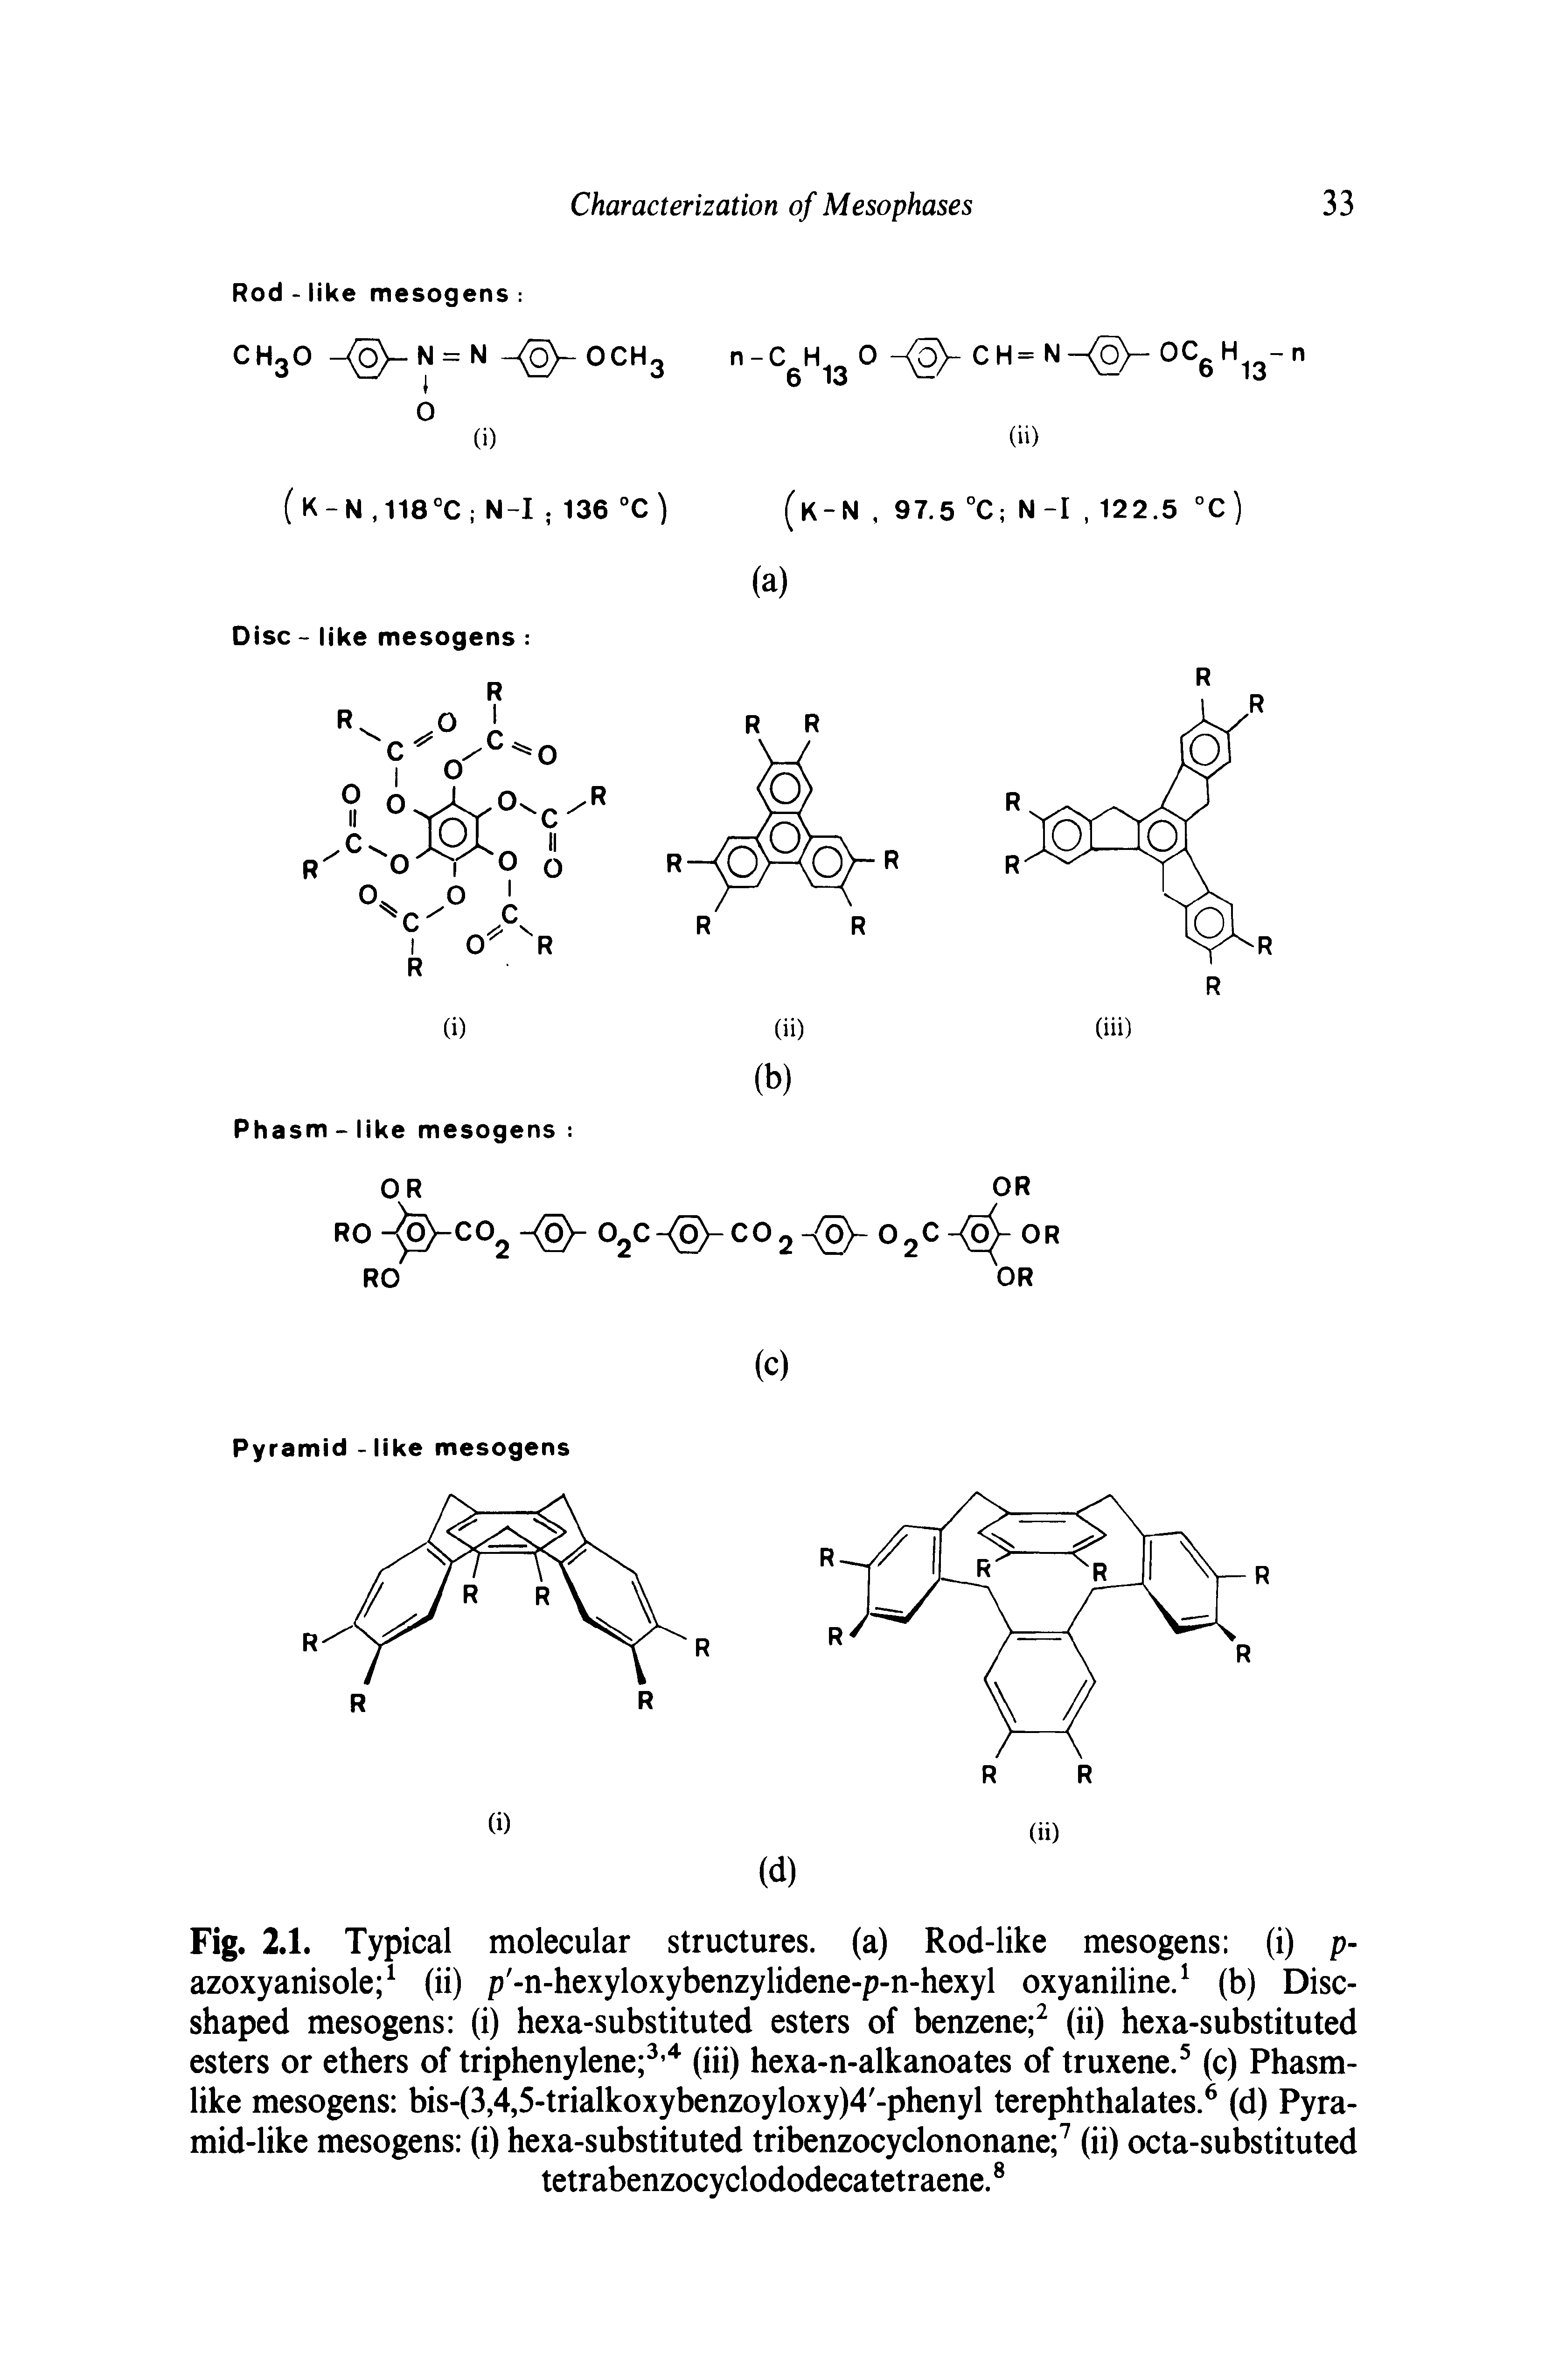 Fig. 2.1. Typical molecular structures, (a) Rod-like mesogens (i) p-azoxyanisole (ii) p -n-hexyloxybenzylidene-p-n-hexyl oxyaniline. (b) Discshaped mesogens (i) hexa-substituted esters of benzene (ii) hexa-substituted esters or ethers of triphenylene " (iii) hexa-n-alkanoates of truxene. (c) Phasm-like mesogens bis-(3,4,5-trialkoxybenzoyloxy)4 -phenyl terephthalates. (d) Pyramid-like mesogens (i) hexa-substituted tribenzocyclononanef (ii) octa-substituted tetrabenzocyclododecatetraene. ...